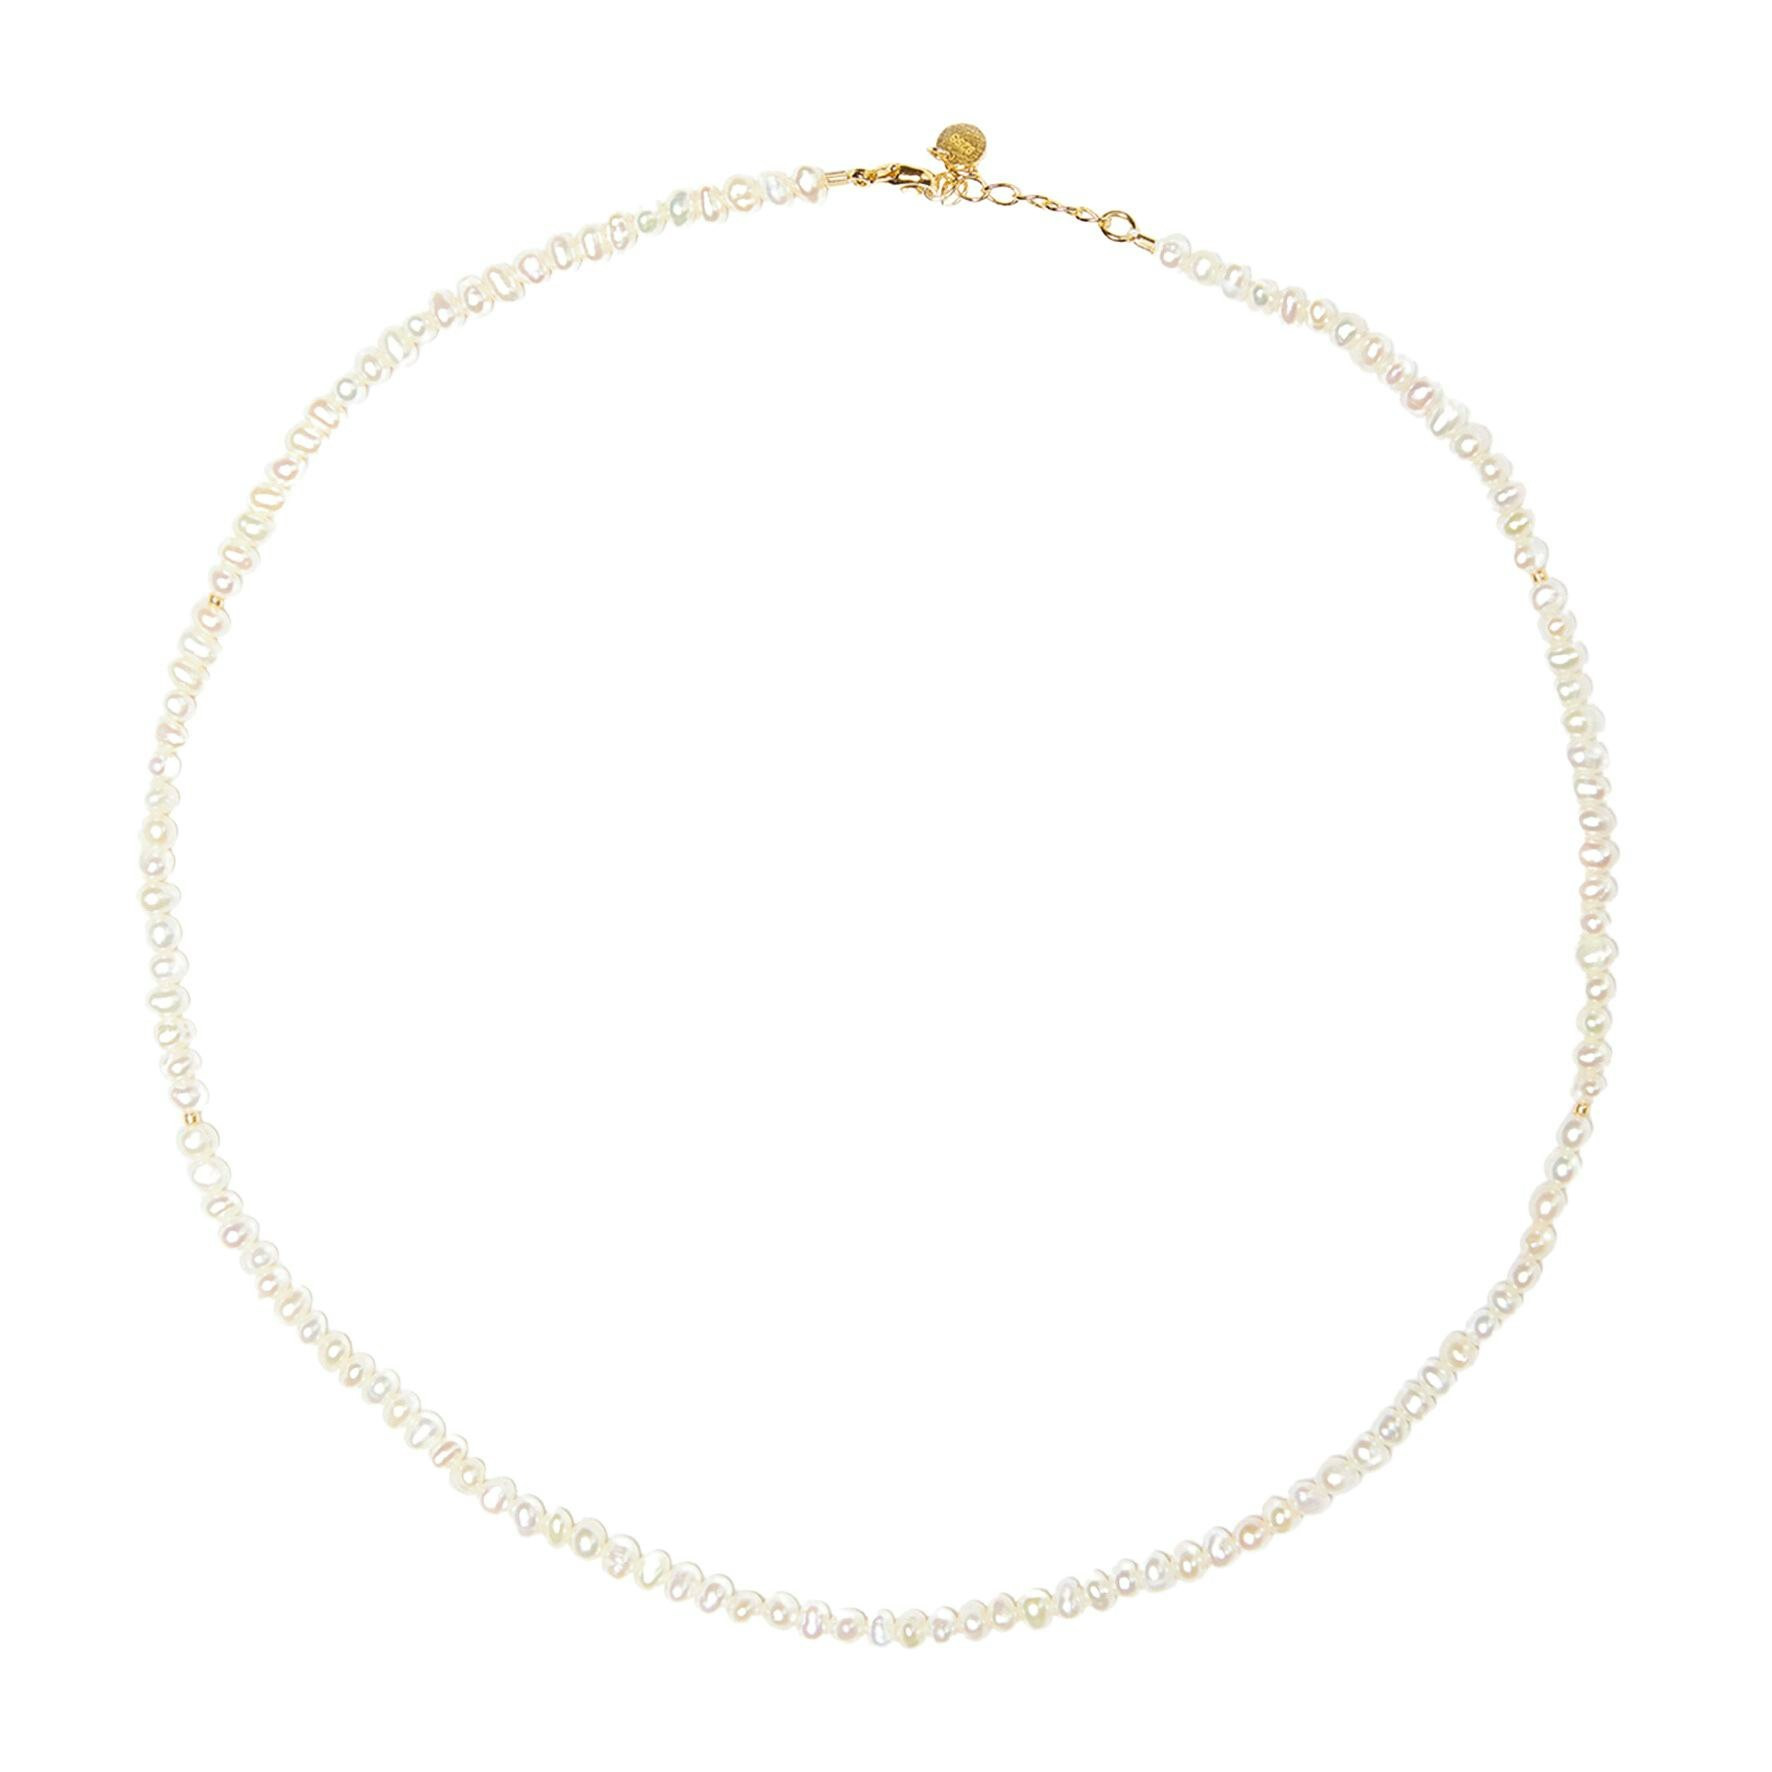 Sky Necklace von Sorelle Jewellery in Silber Sterling 925